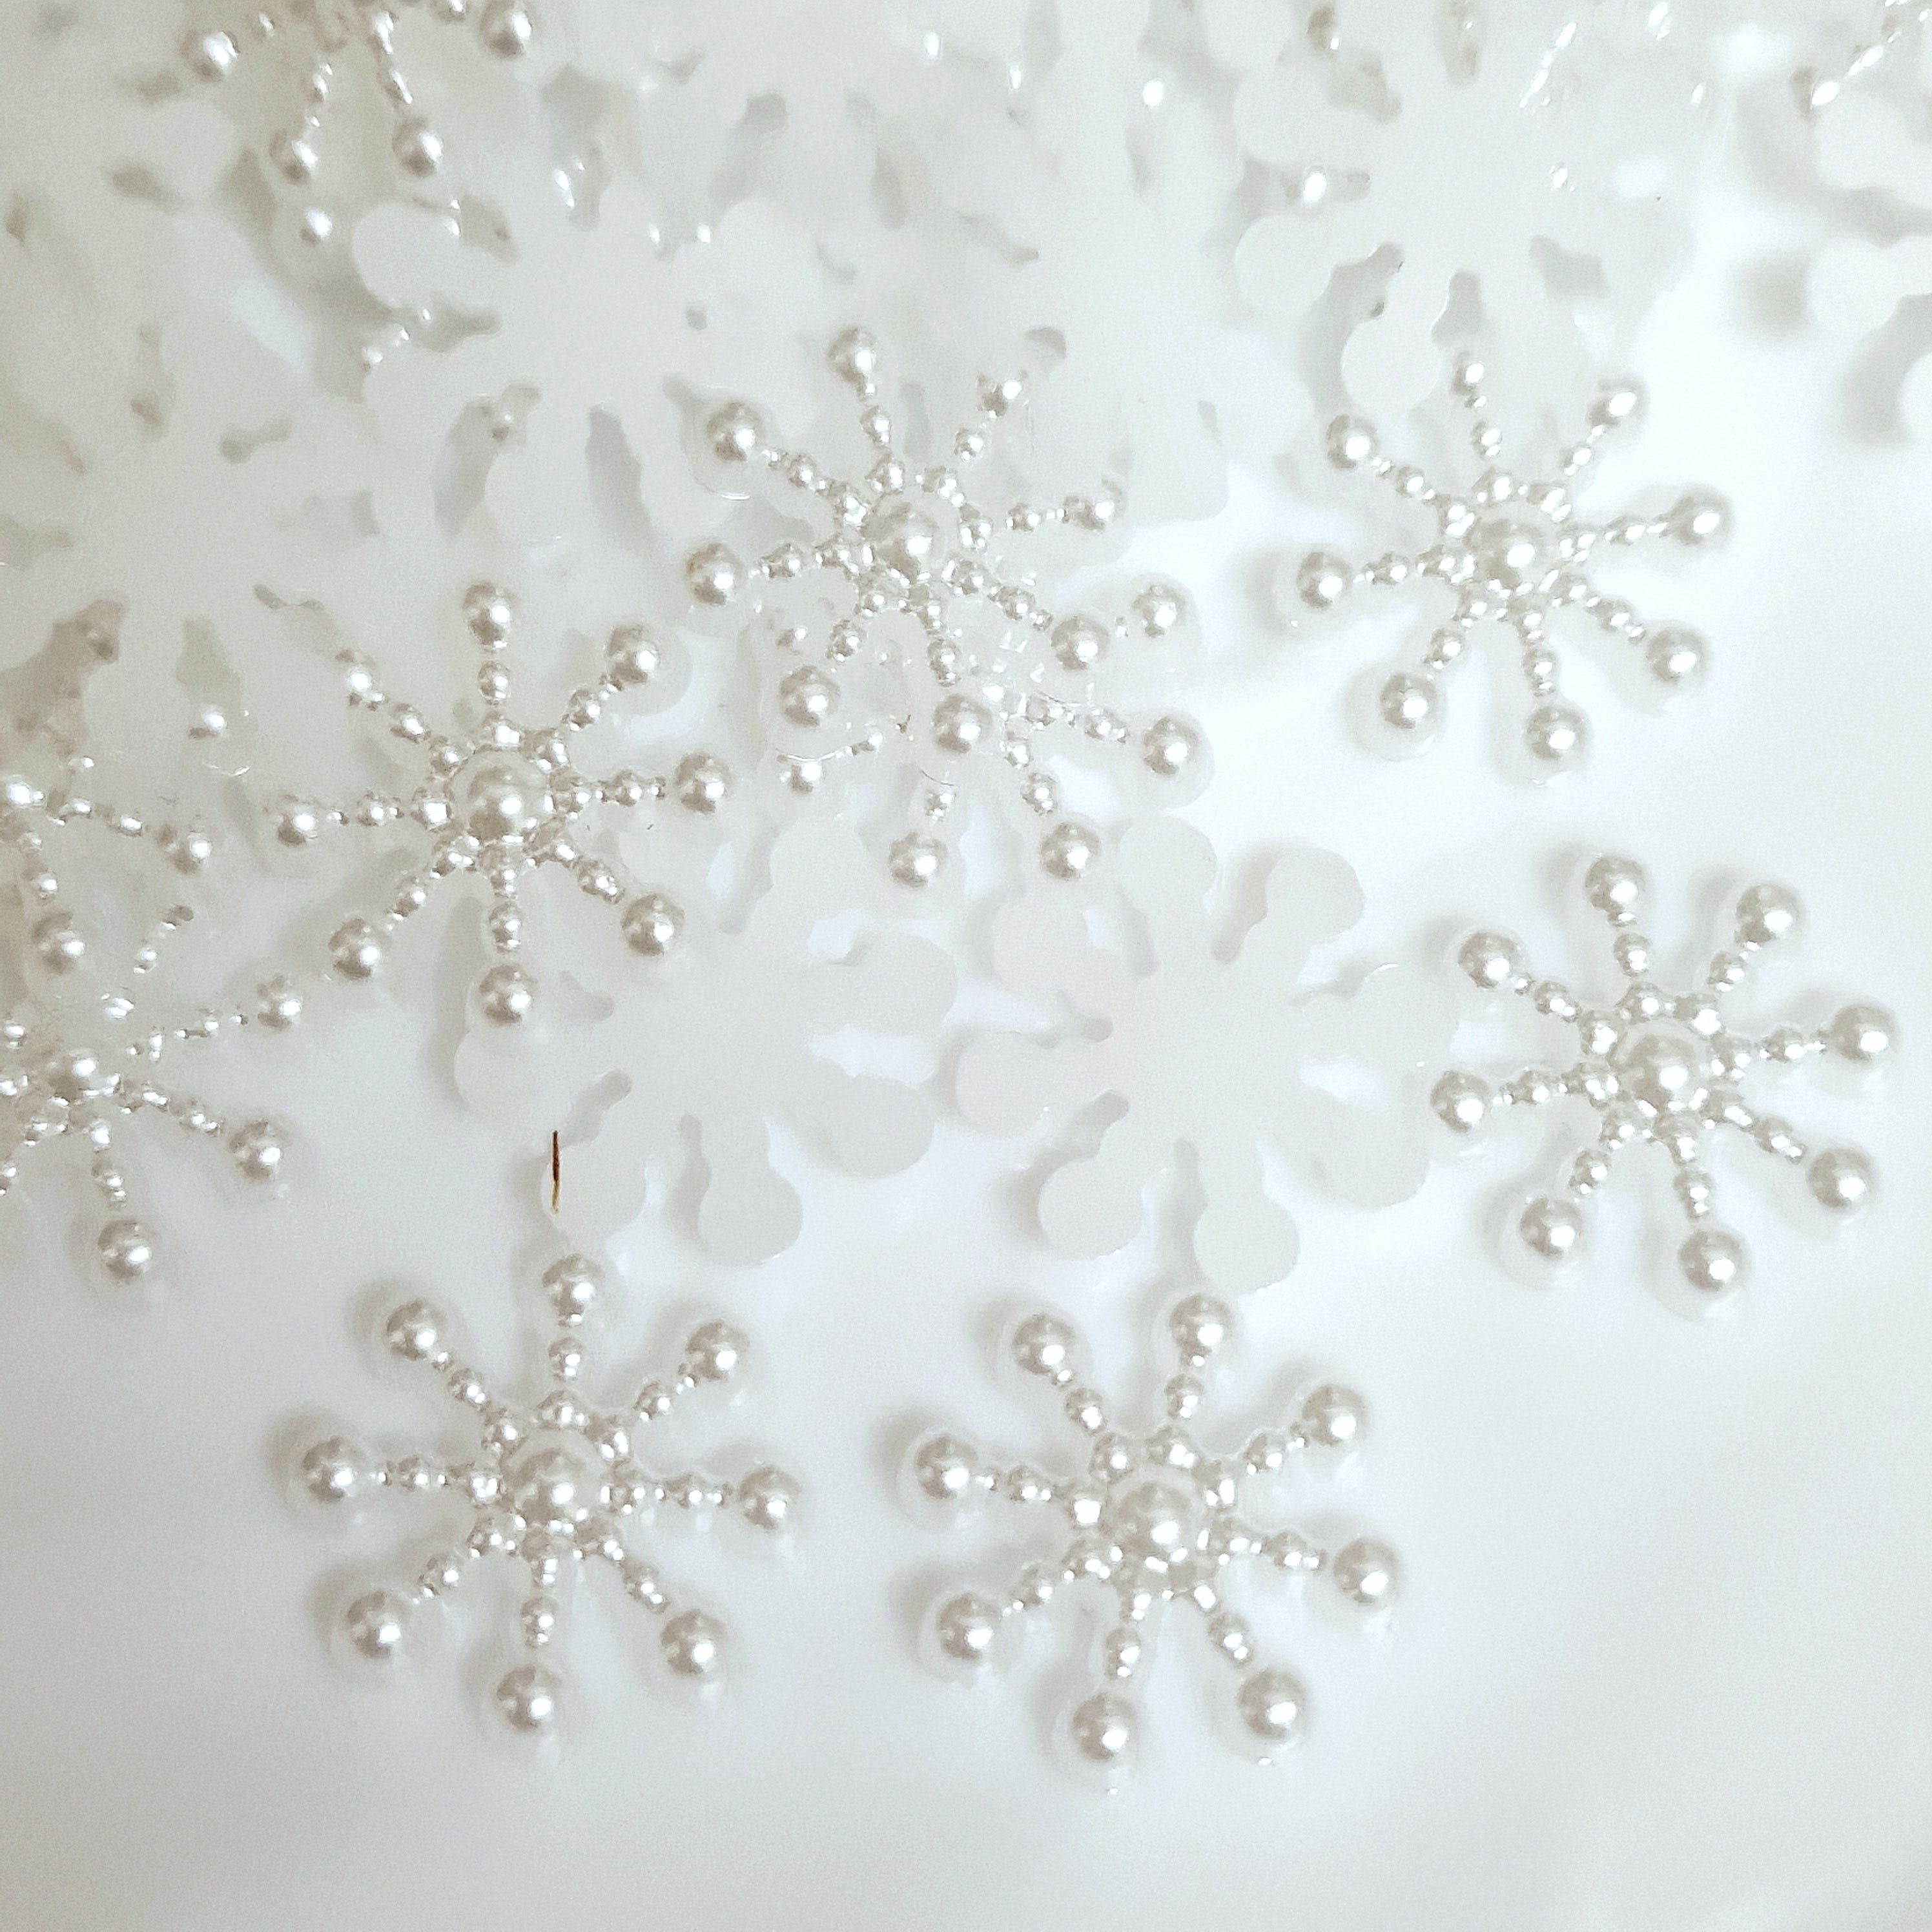 MajorCrafts 100pcs 15mm White Flat Back Snowflake Resin Pearls